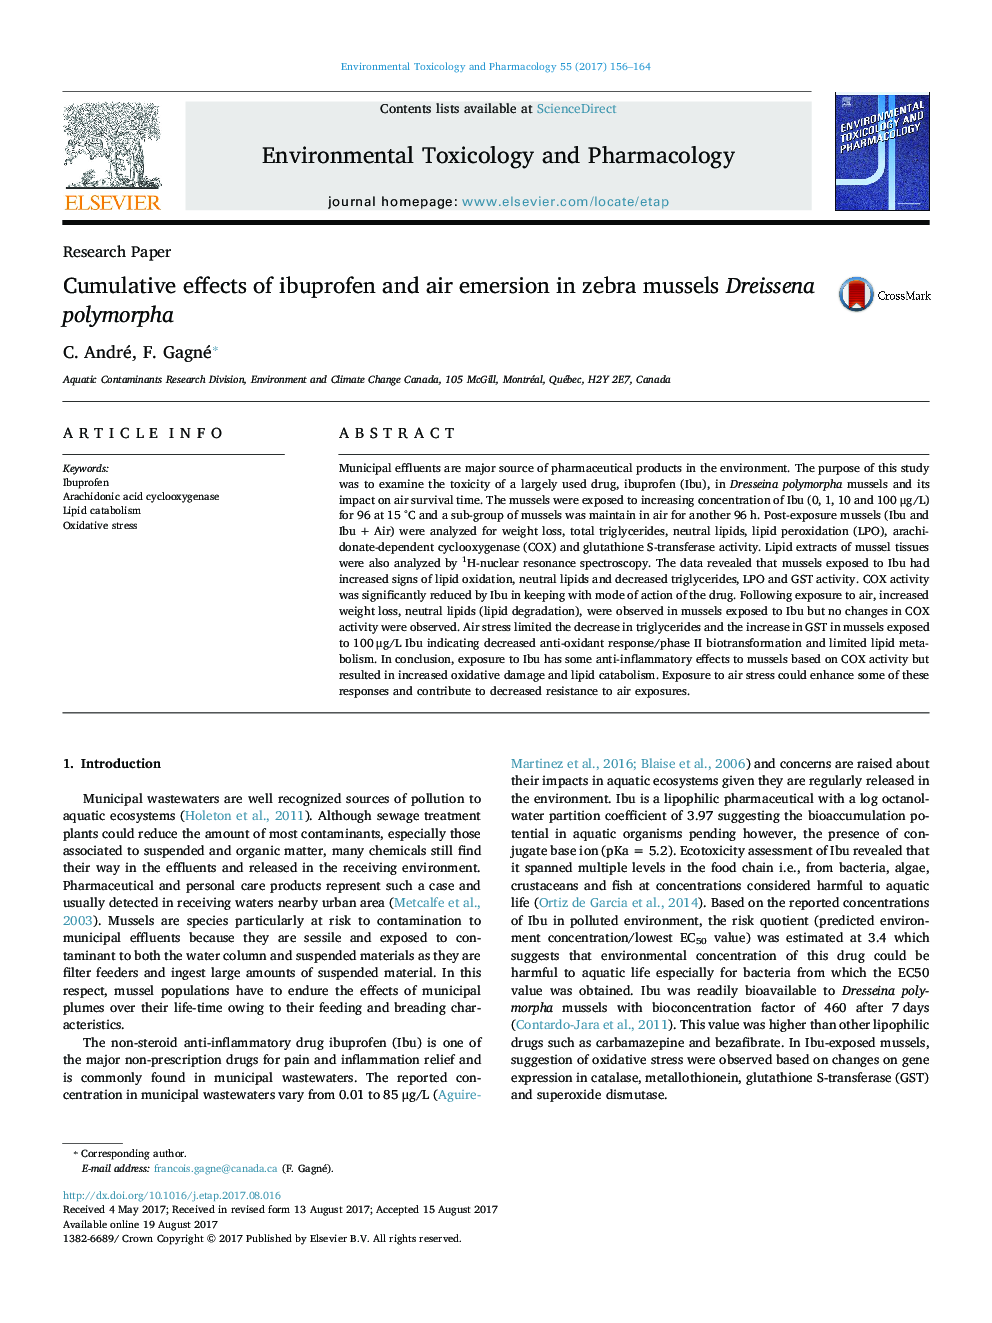 Cumulative effects of ibuprofen and air emersion in zebra mussels Dreissena polymorpha